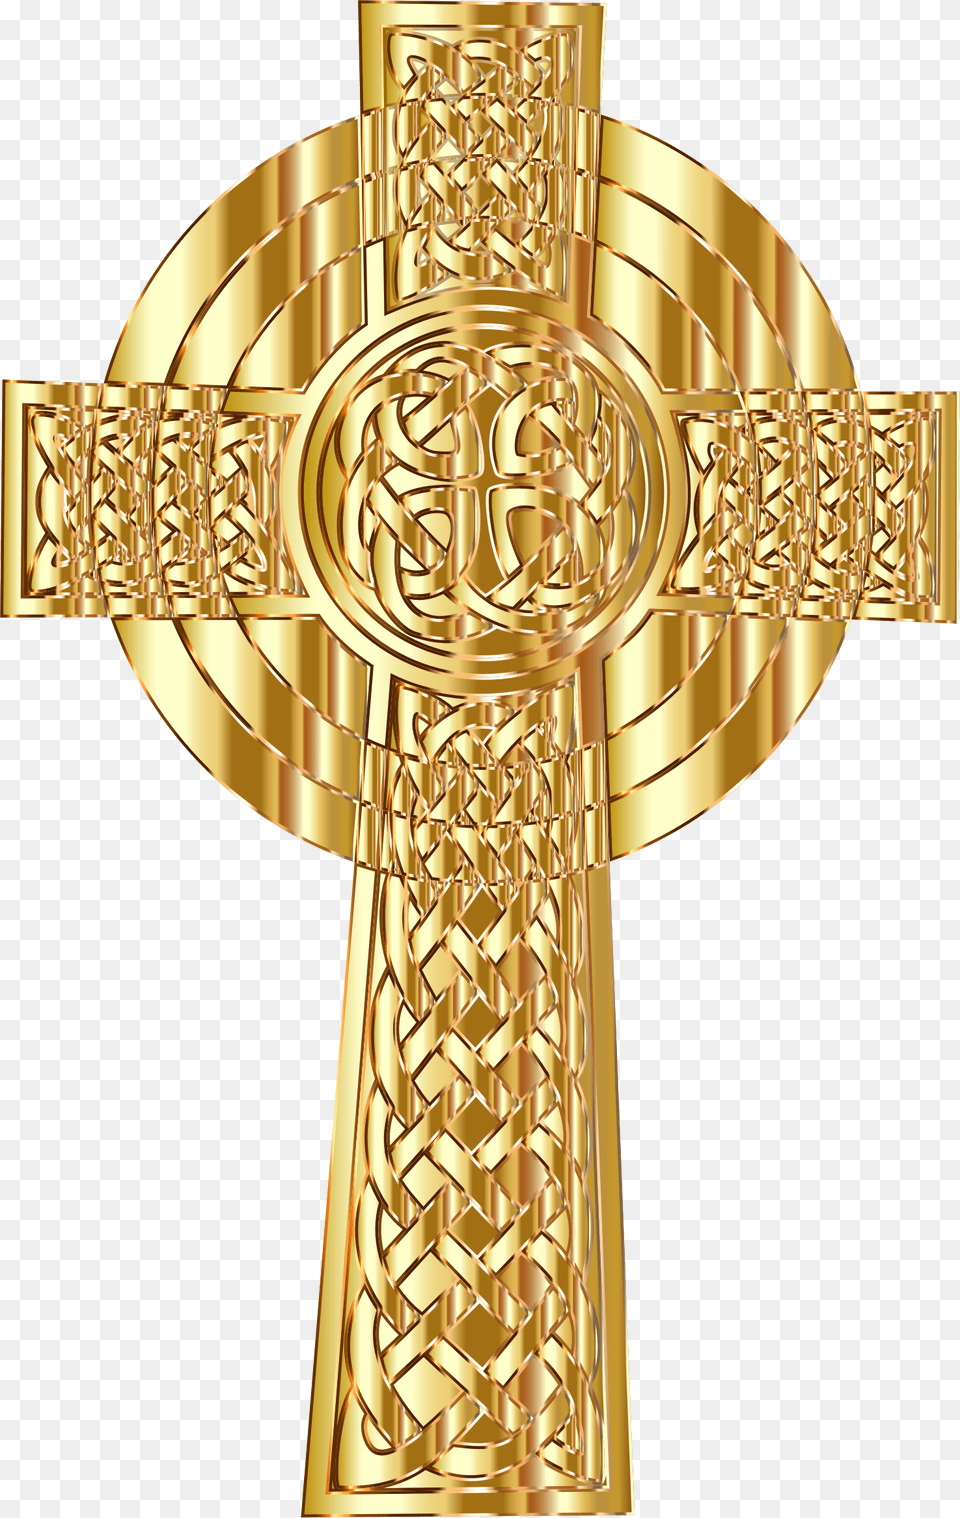 Golden Celtic Cross 2 Clip Arts Golden Jesus Cross, Symbol, Gold, Festival, Hanukkah Menorah Png Image